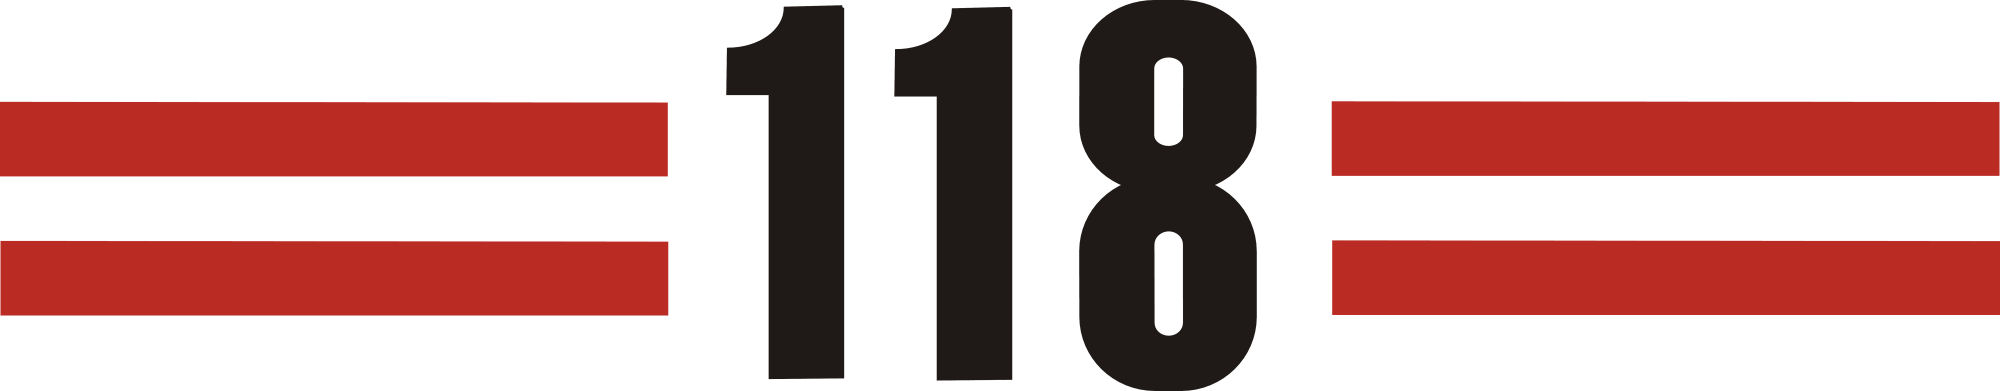 118-logo-2000.jpg